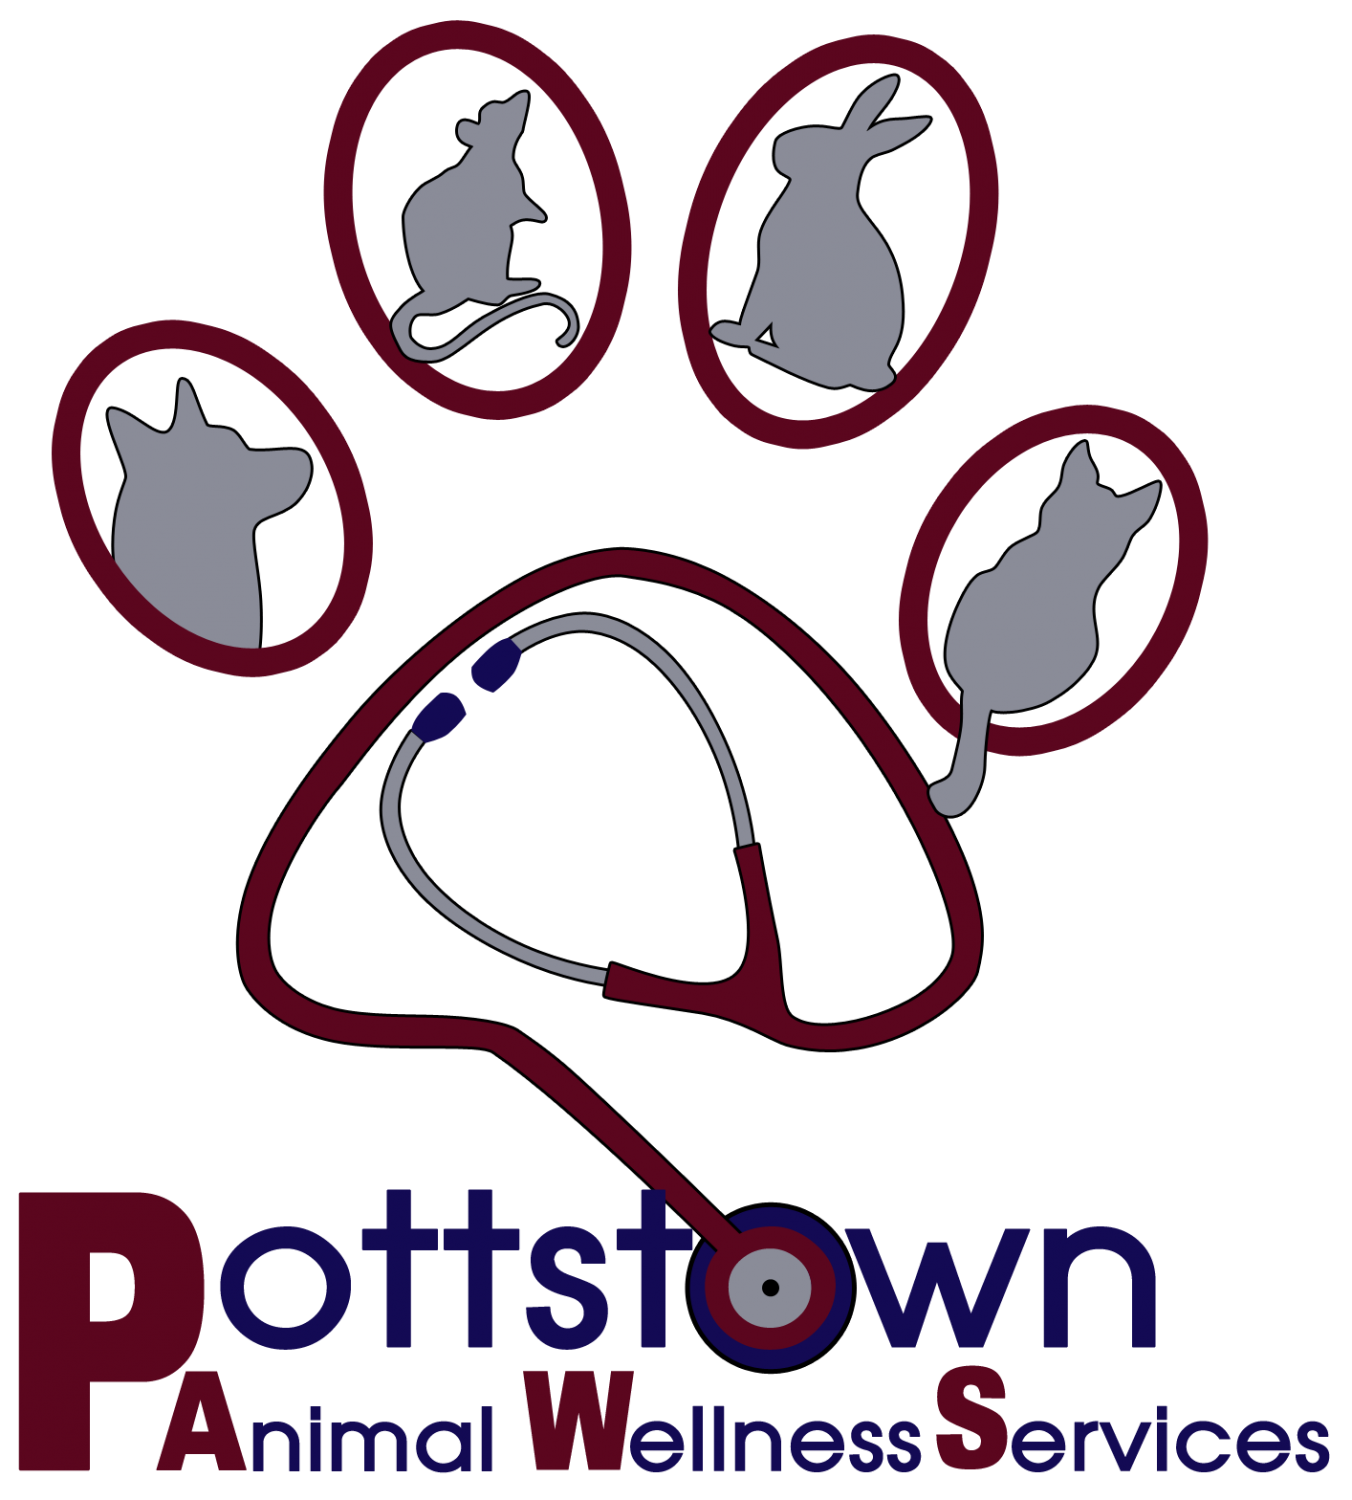 Pottstown Animal Wellness Services Logo